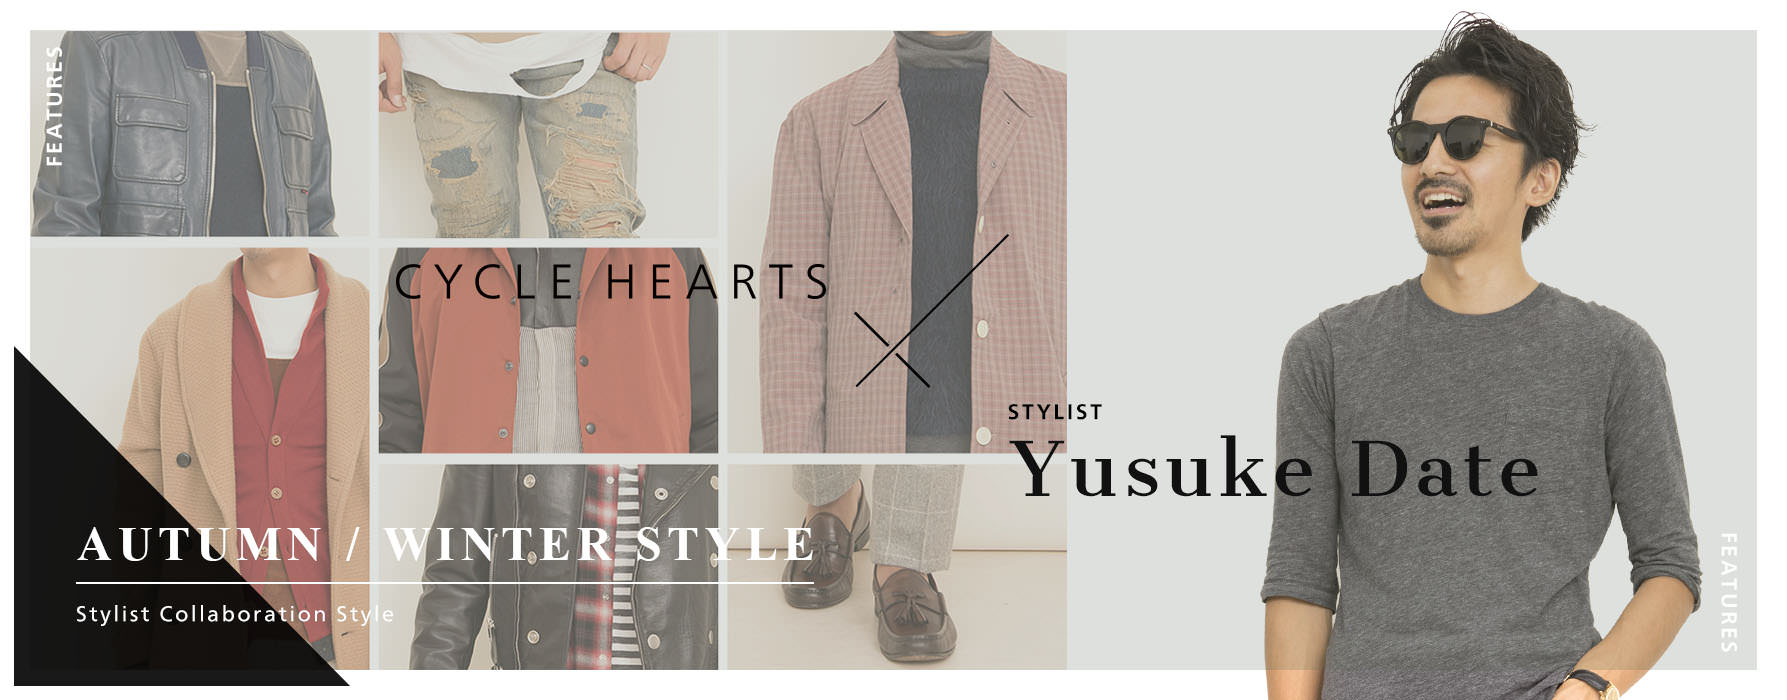 CYCLE HEARTS  Yusuke Date